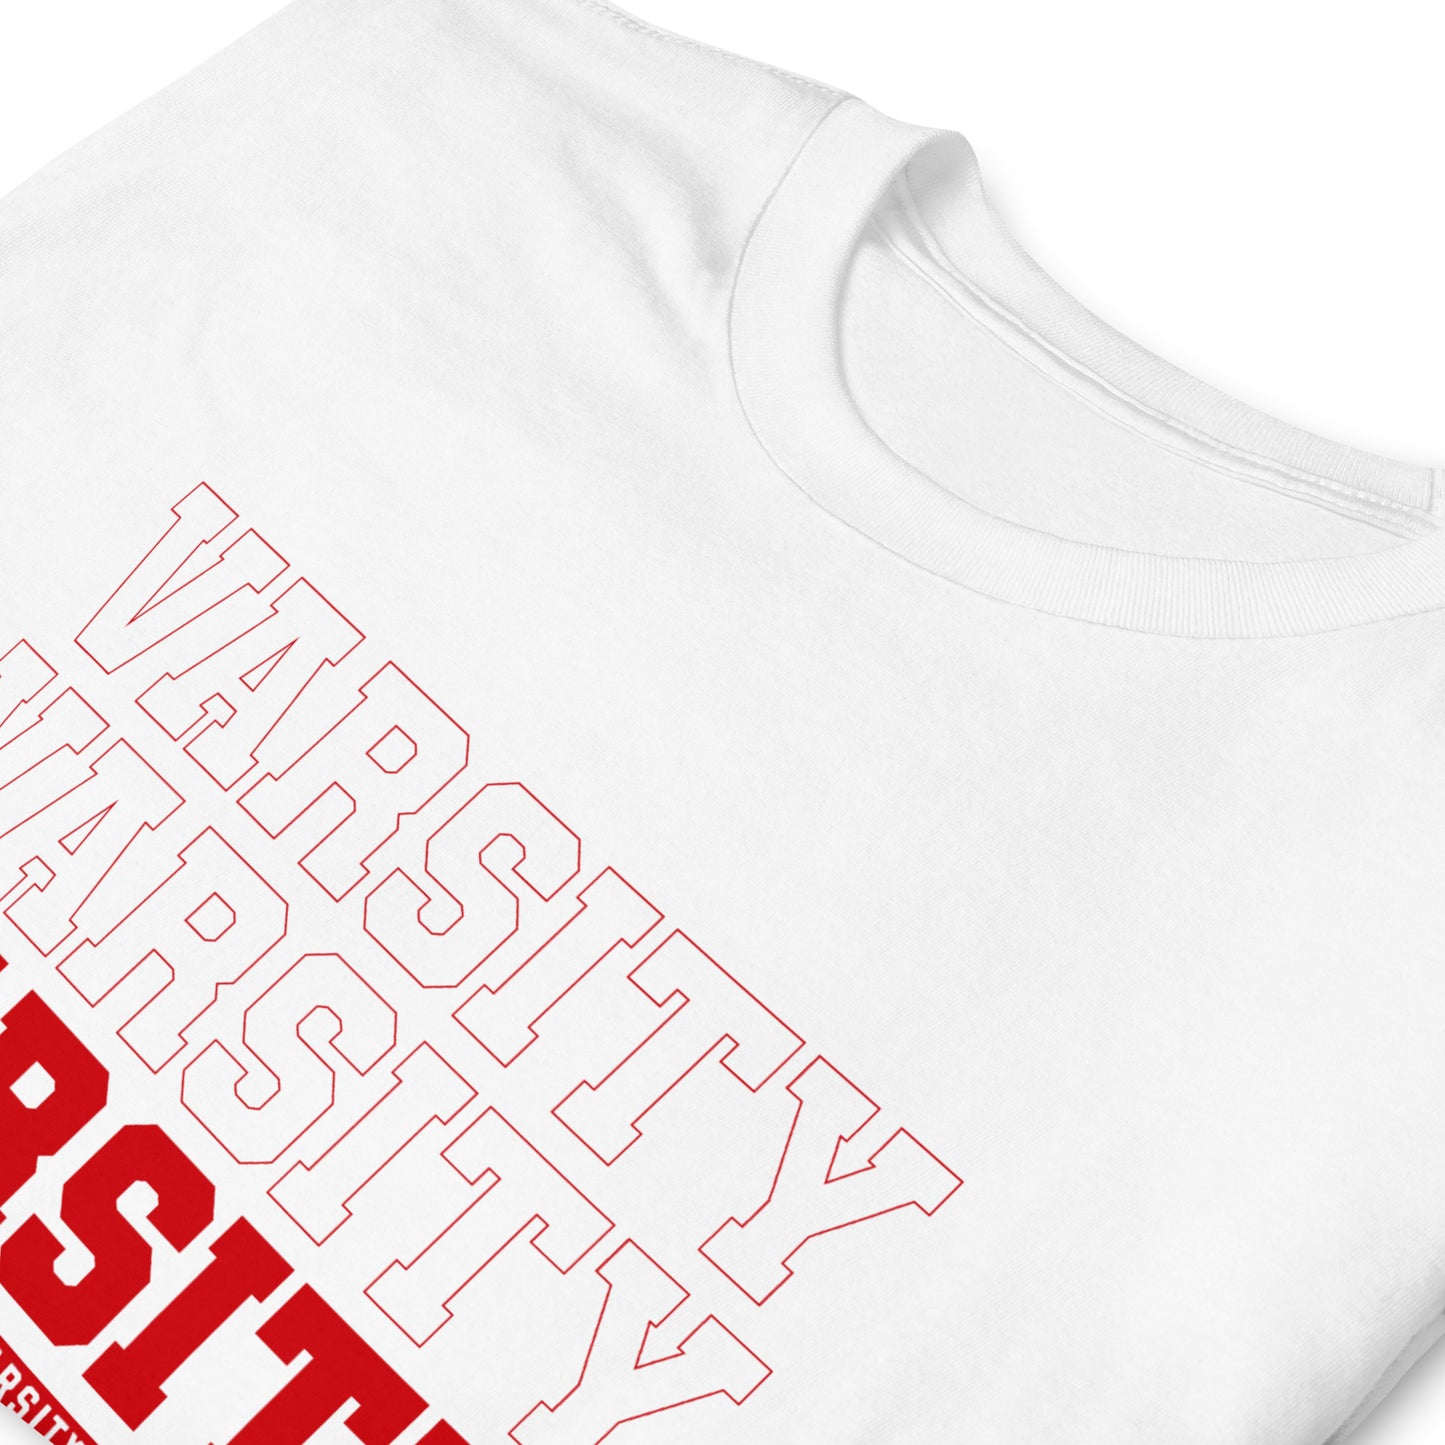 Varsity High School Football | Short-Sleeve Unisex T-Shirt